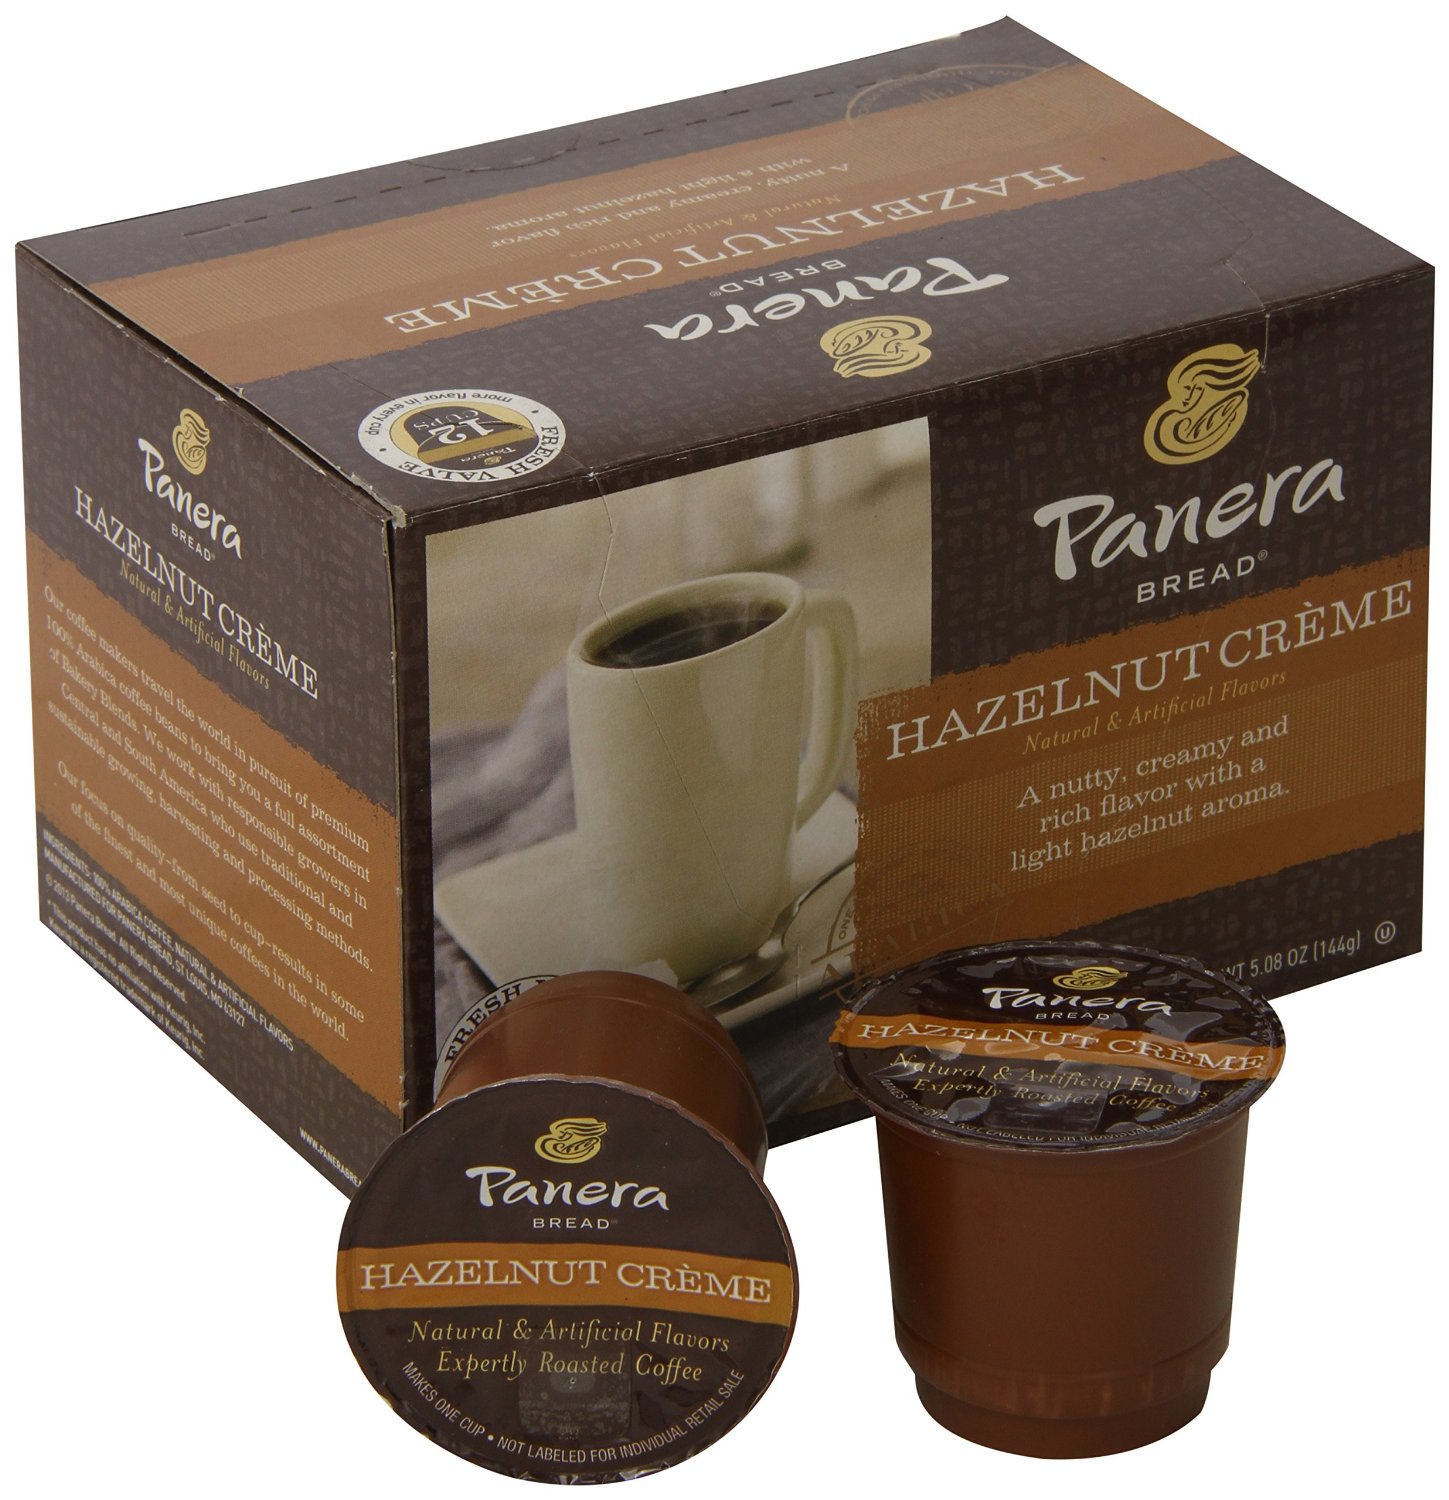 Panera Bread Hazelnut Creme Coffee K-Cups